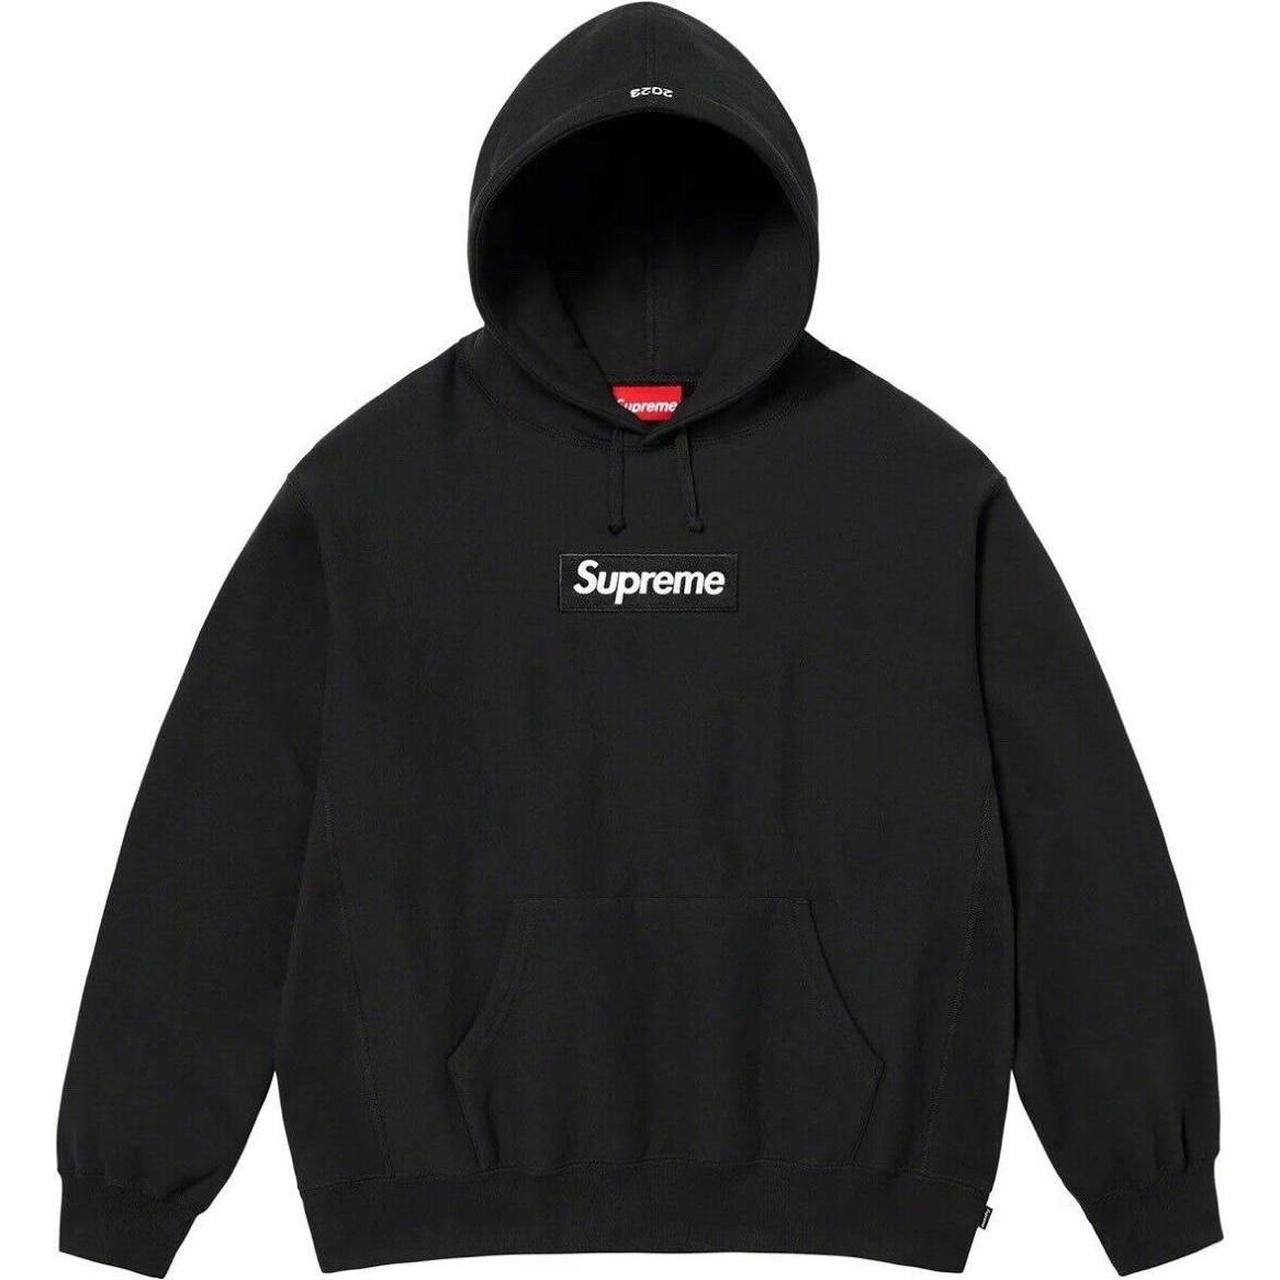 Brand new Supreme Box Logo Hooded Sweatshirt in... - Depop